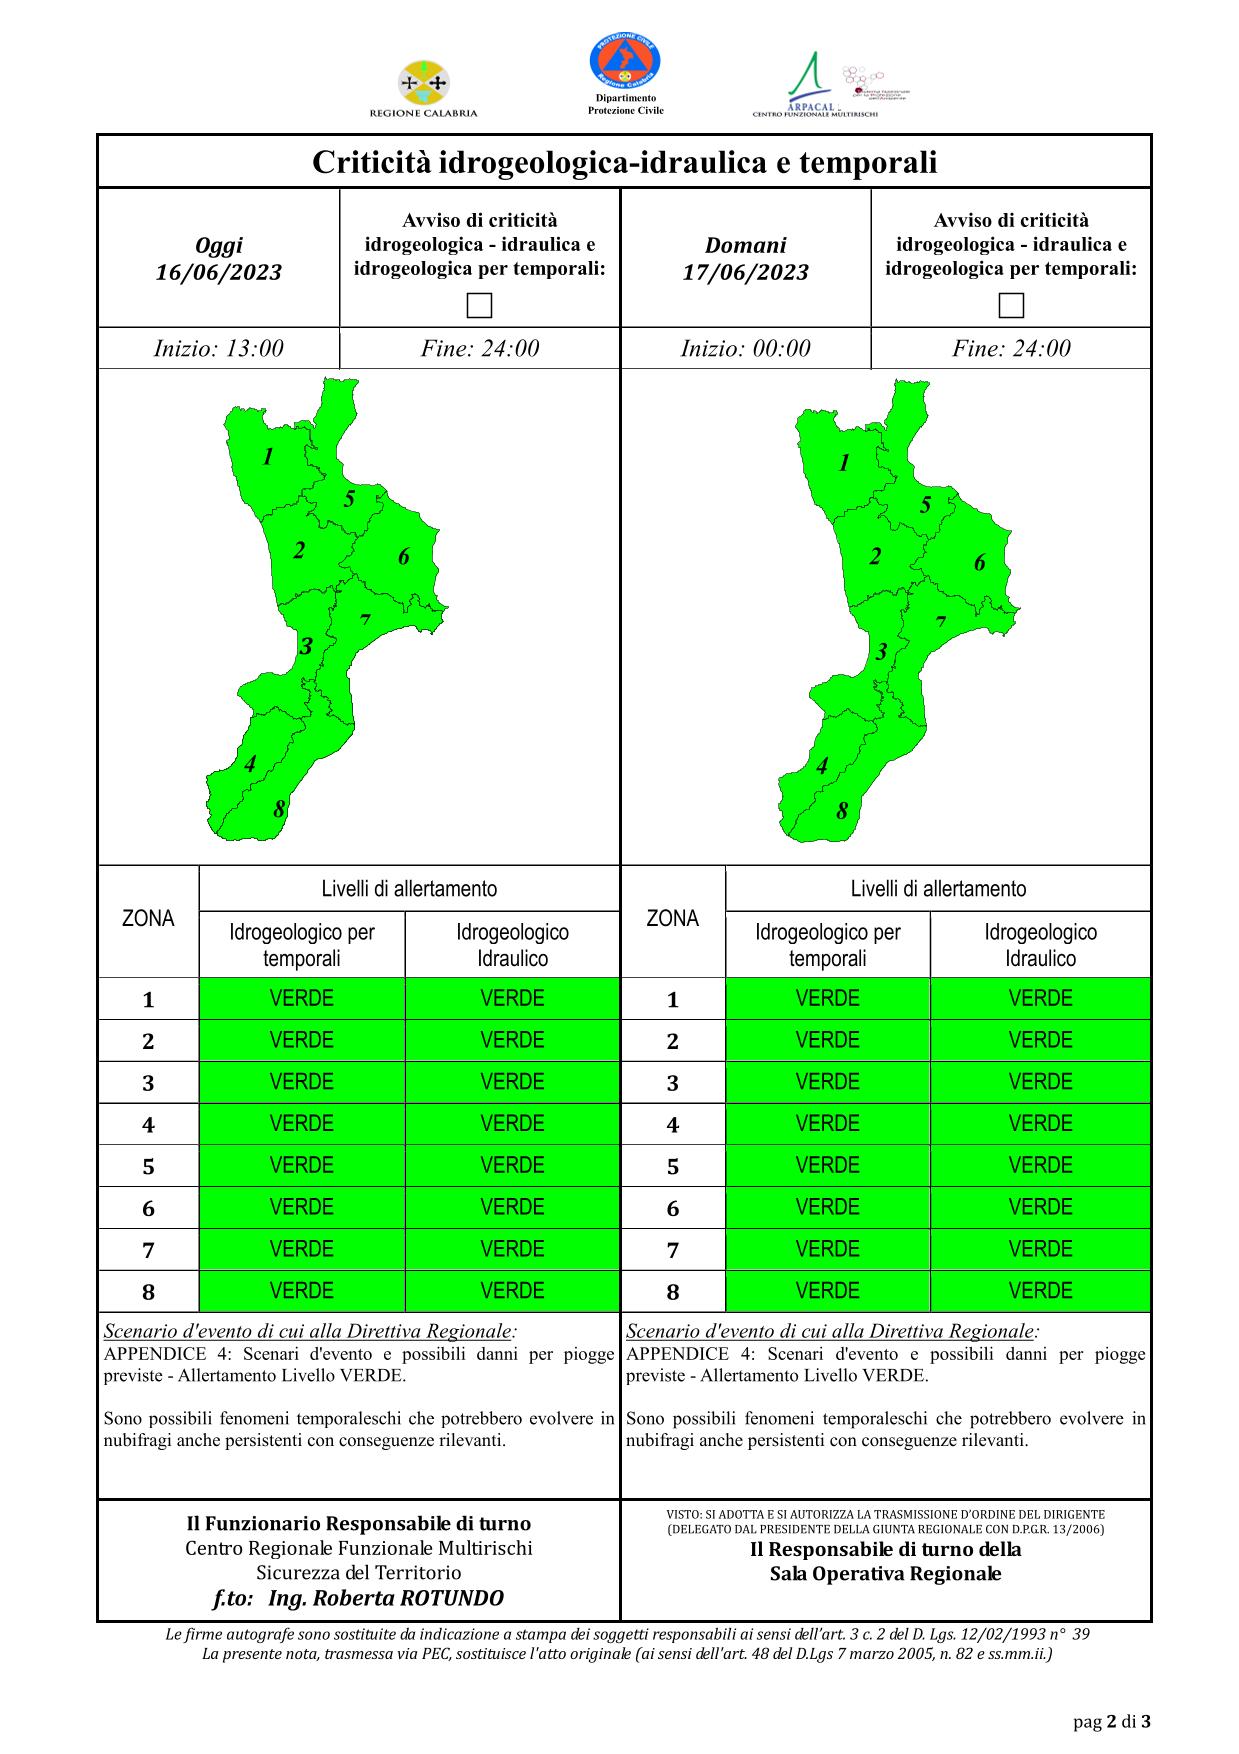 Criticità idrogeologica-idraulica e temporali in Calabria 16-06-2023